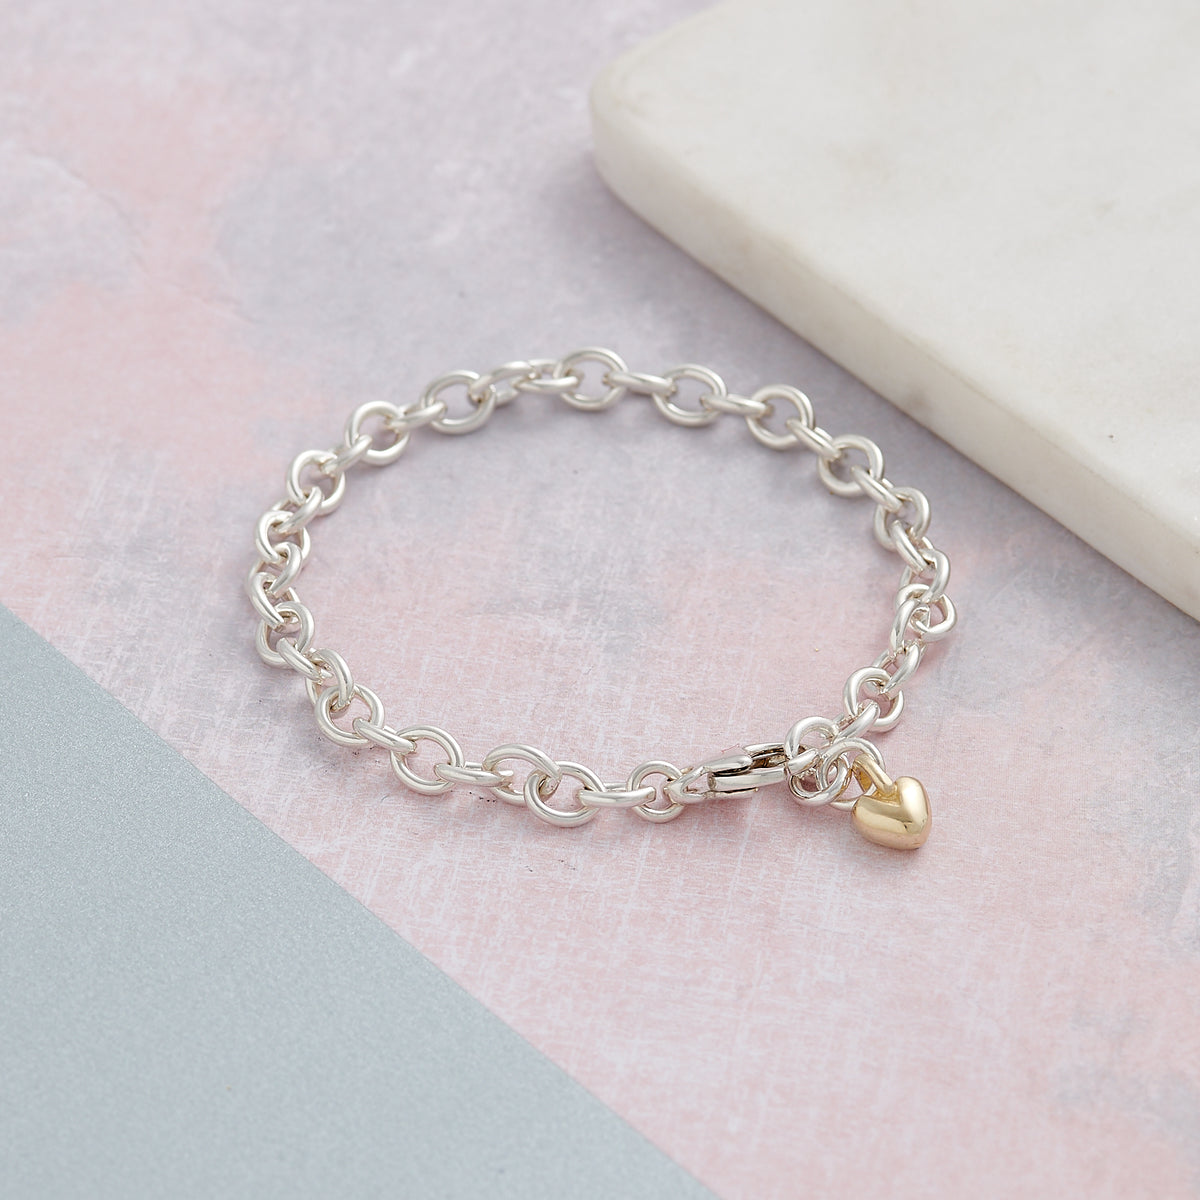 Solid sterling silver and solid gold heart adjustable charm bracelet designer Scarlett Jewellery